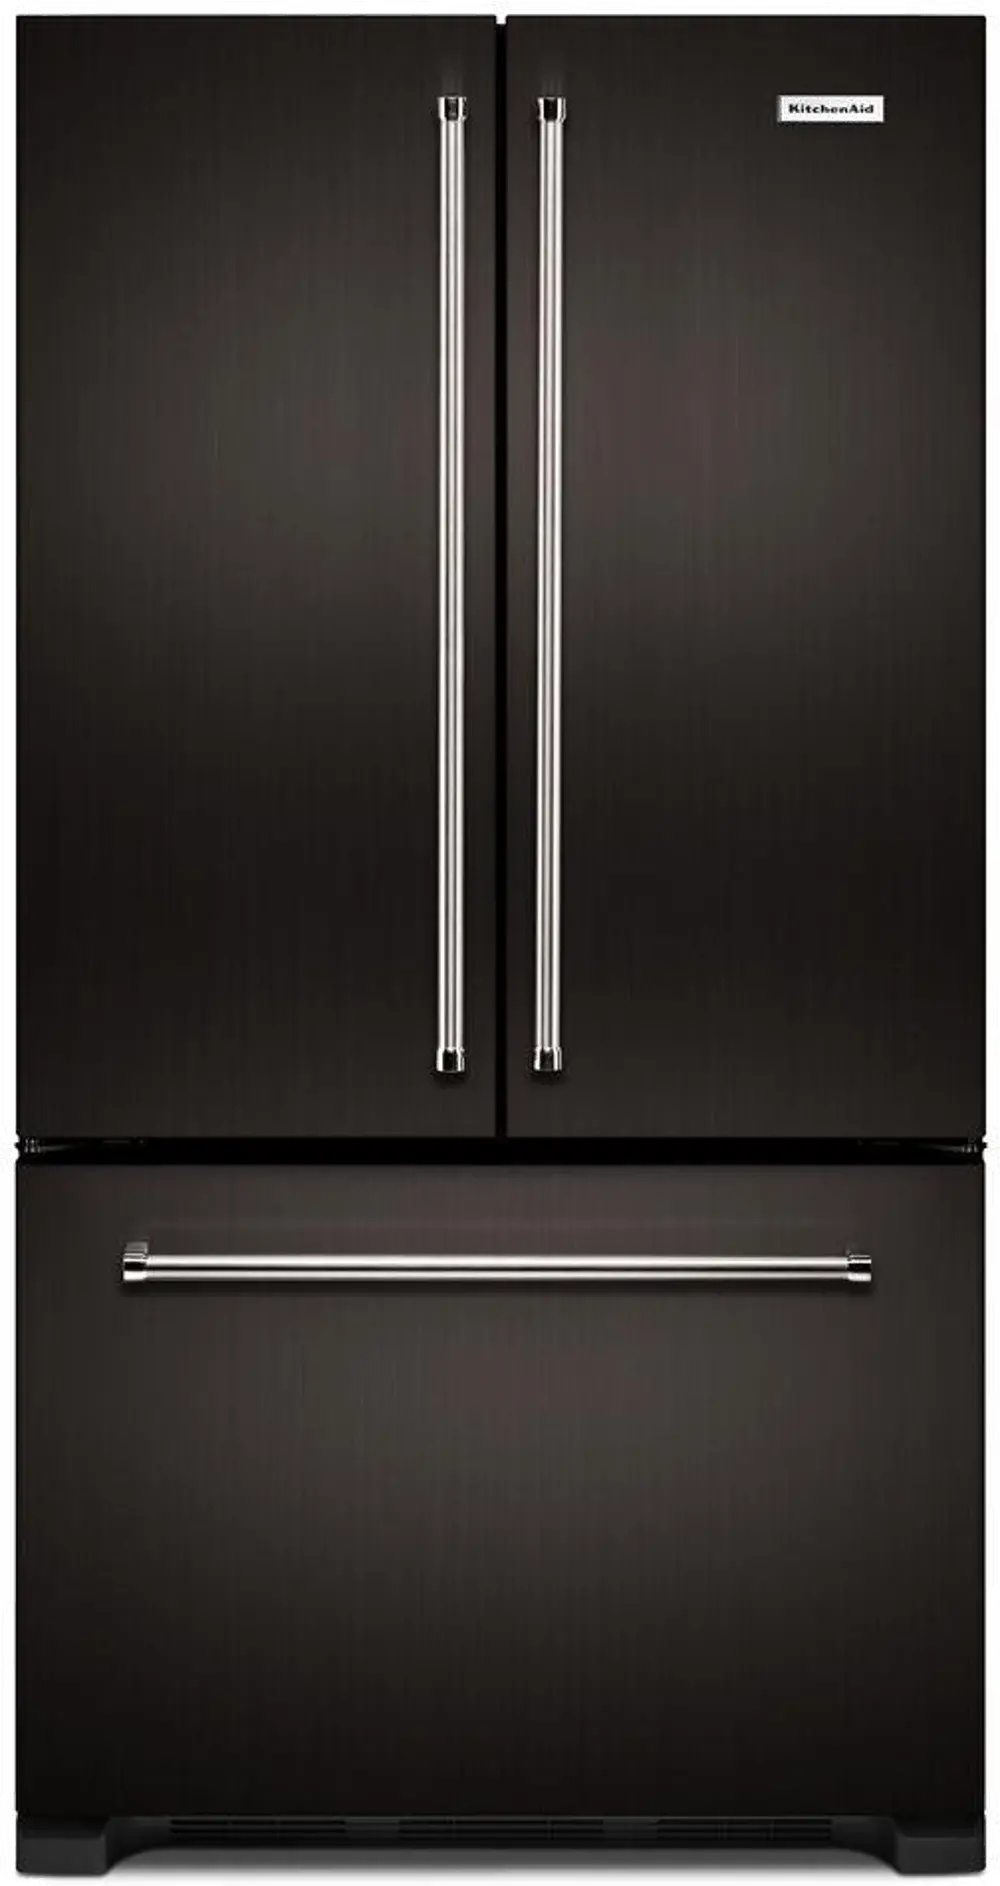 KRFC302EBS KitchenAid Counter Depth French Door Refrigerator - 22 cu. ft., 36 Inch Black Stainless Steel-1